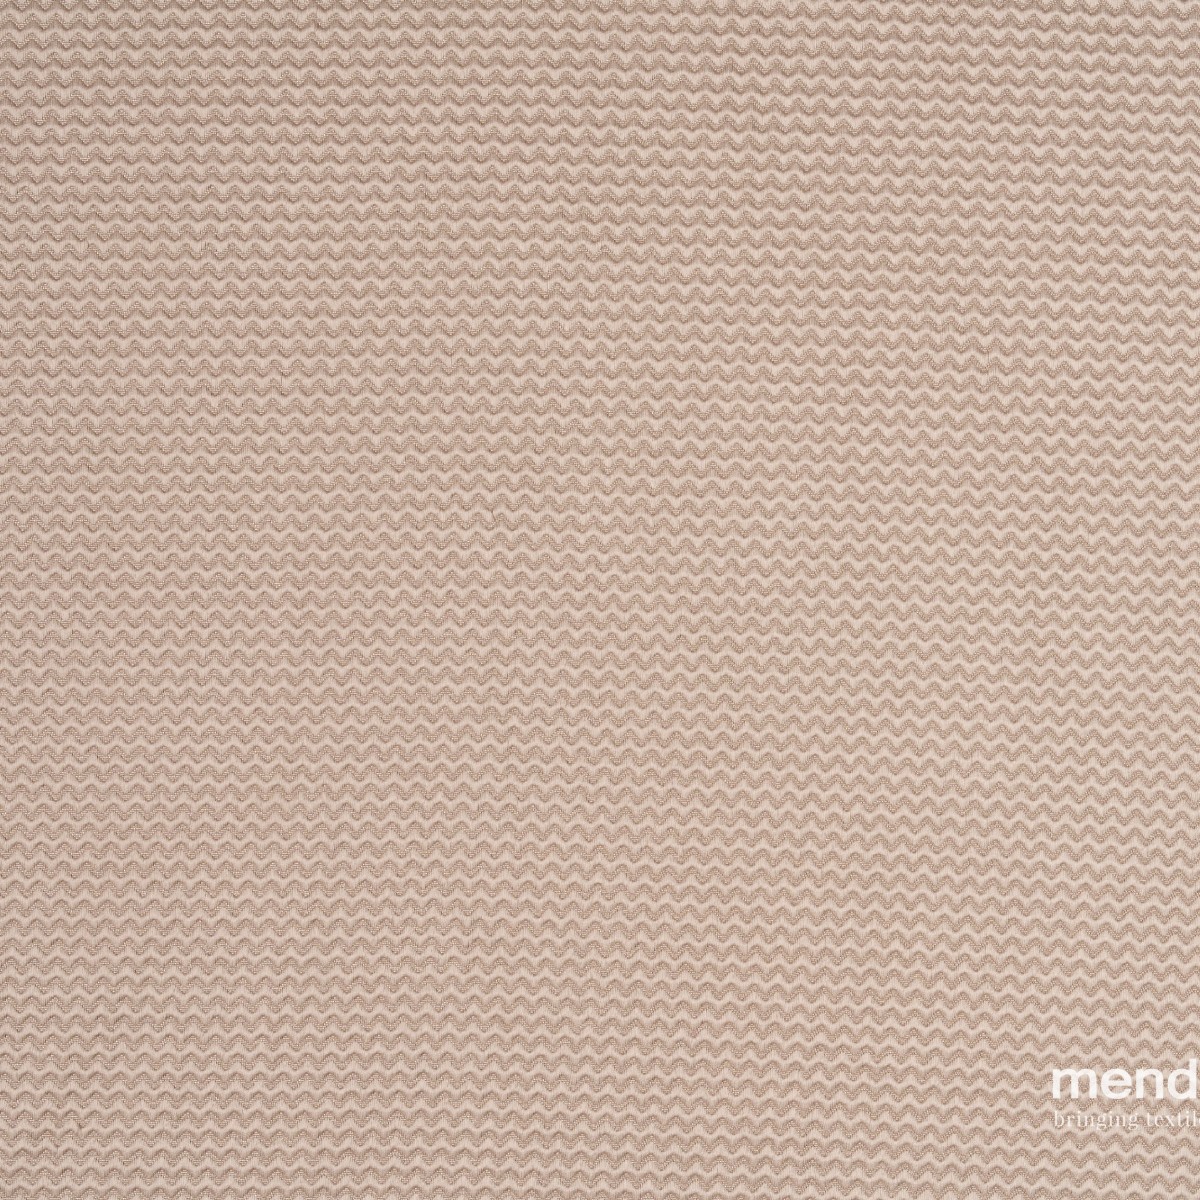 Draperii Mendola fabrics MDF-314-CIELO. Conține culorile: Gri, Gri Veveriță, Gri, Gri Deschis, Galben, Galben Pastel, Gri, Gri Granit, Gri, Gri Khaki